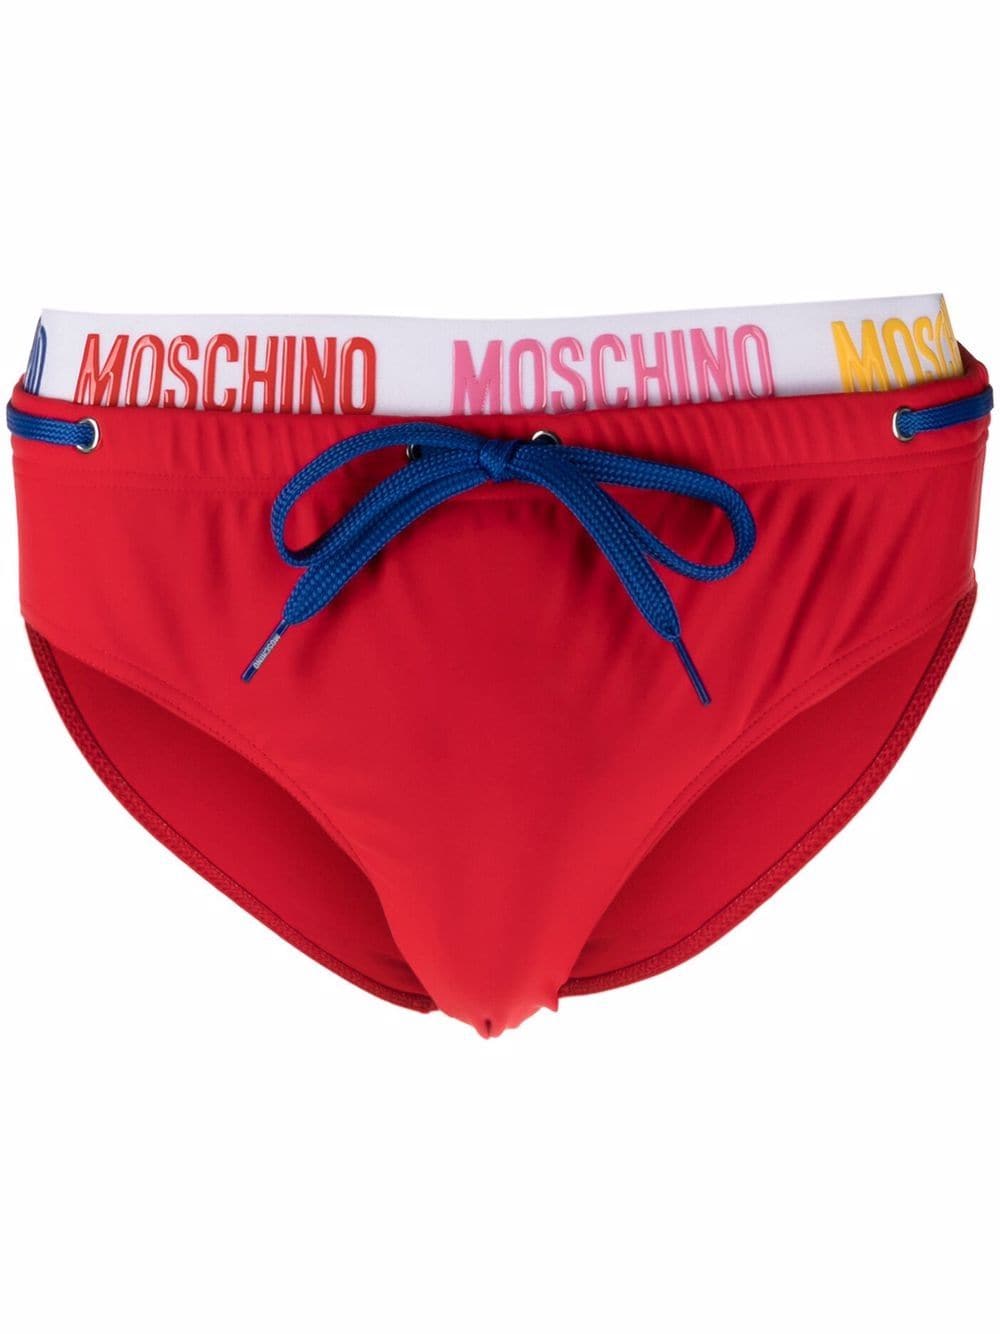 фото Moschino плавки с вышитым логотипом